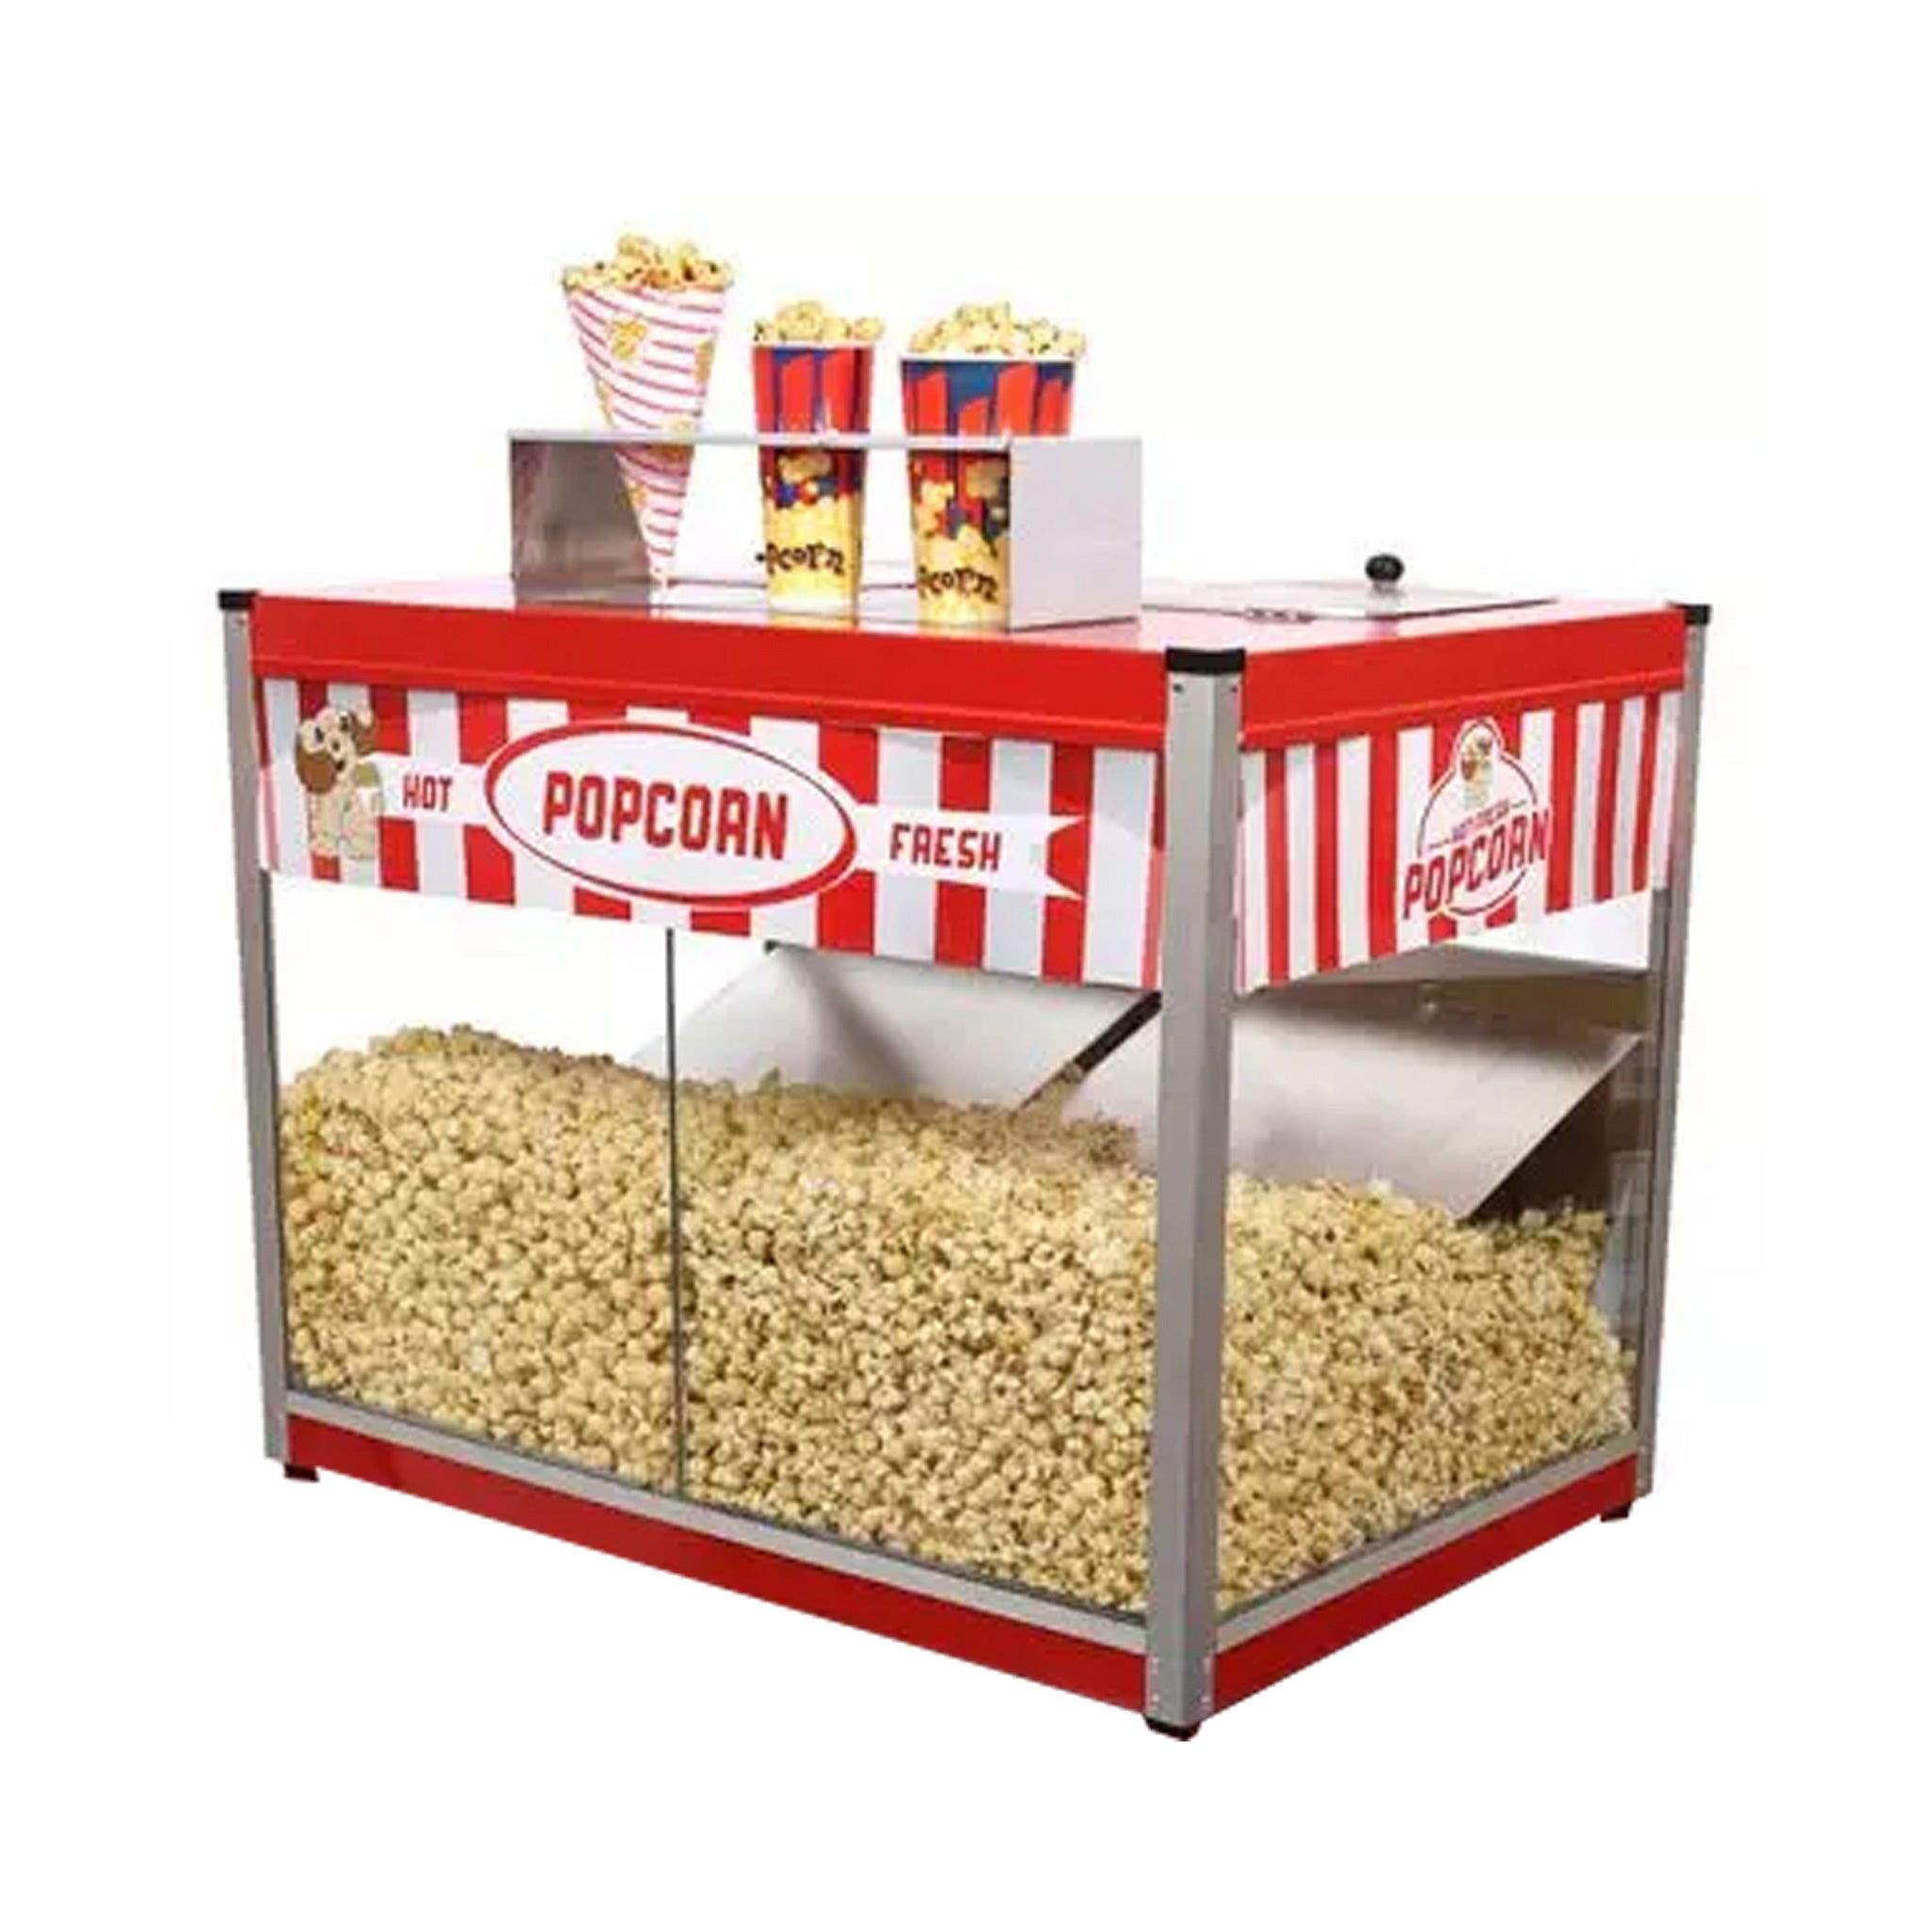 Large Double popcorn warmer